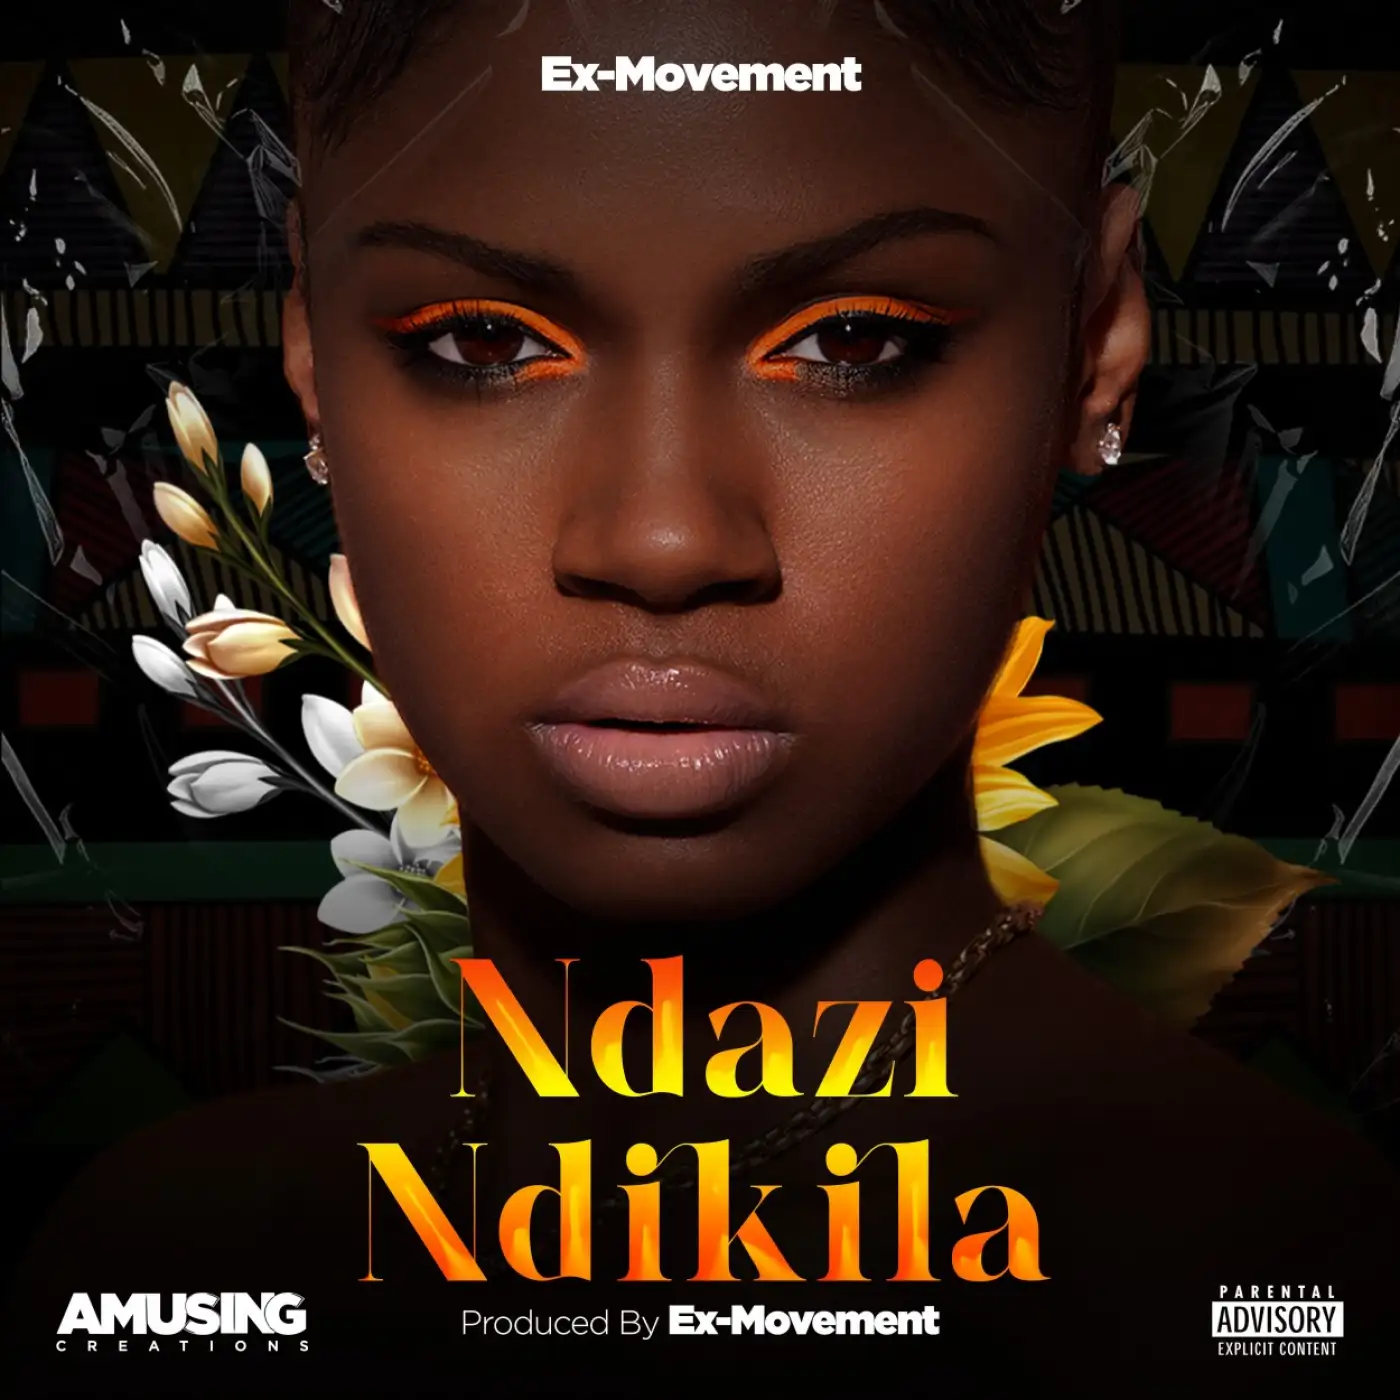 Ex-Movement-Ex-Movement - Ndazindikila-song artwork cover